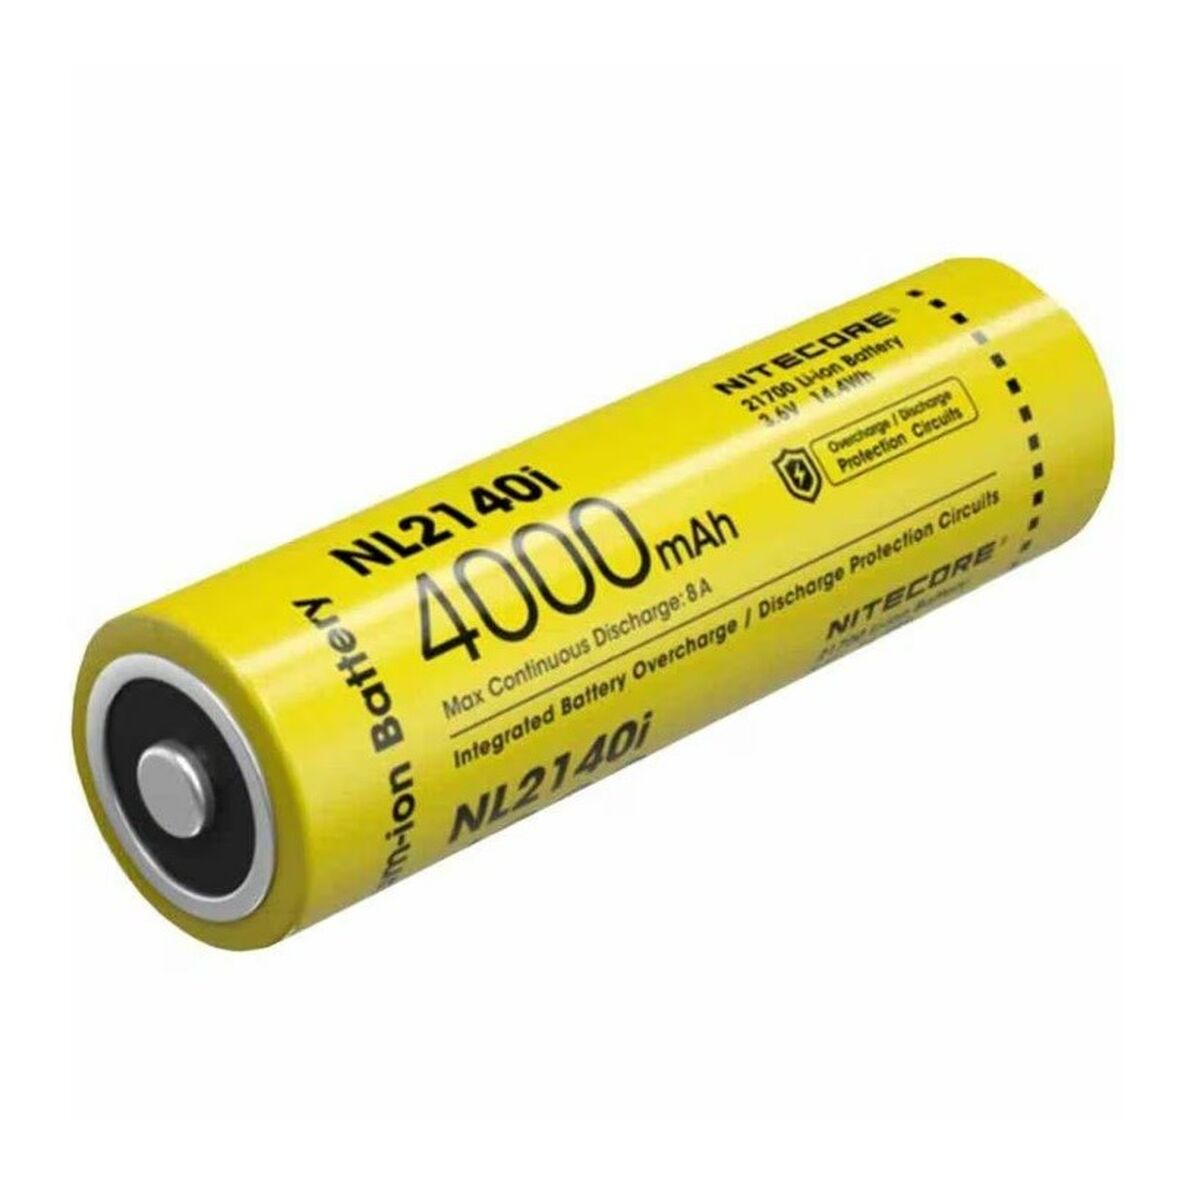 Batteria ricaricabile Nitecore NT-NL2140I 4000 mAh 3,6 V 21700